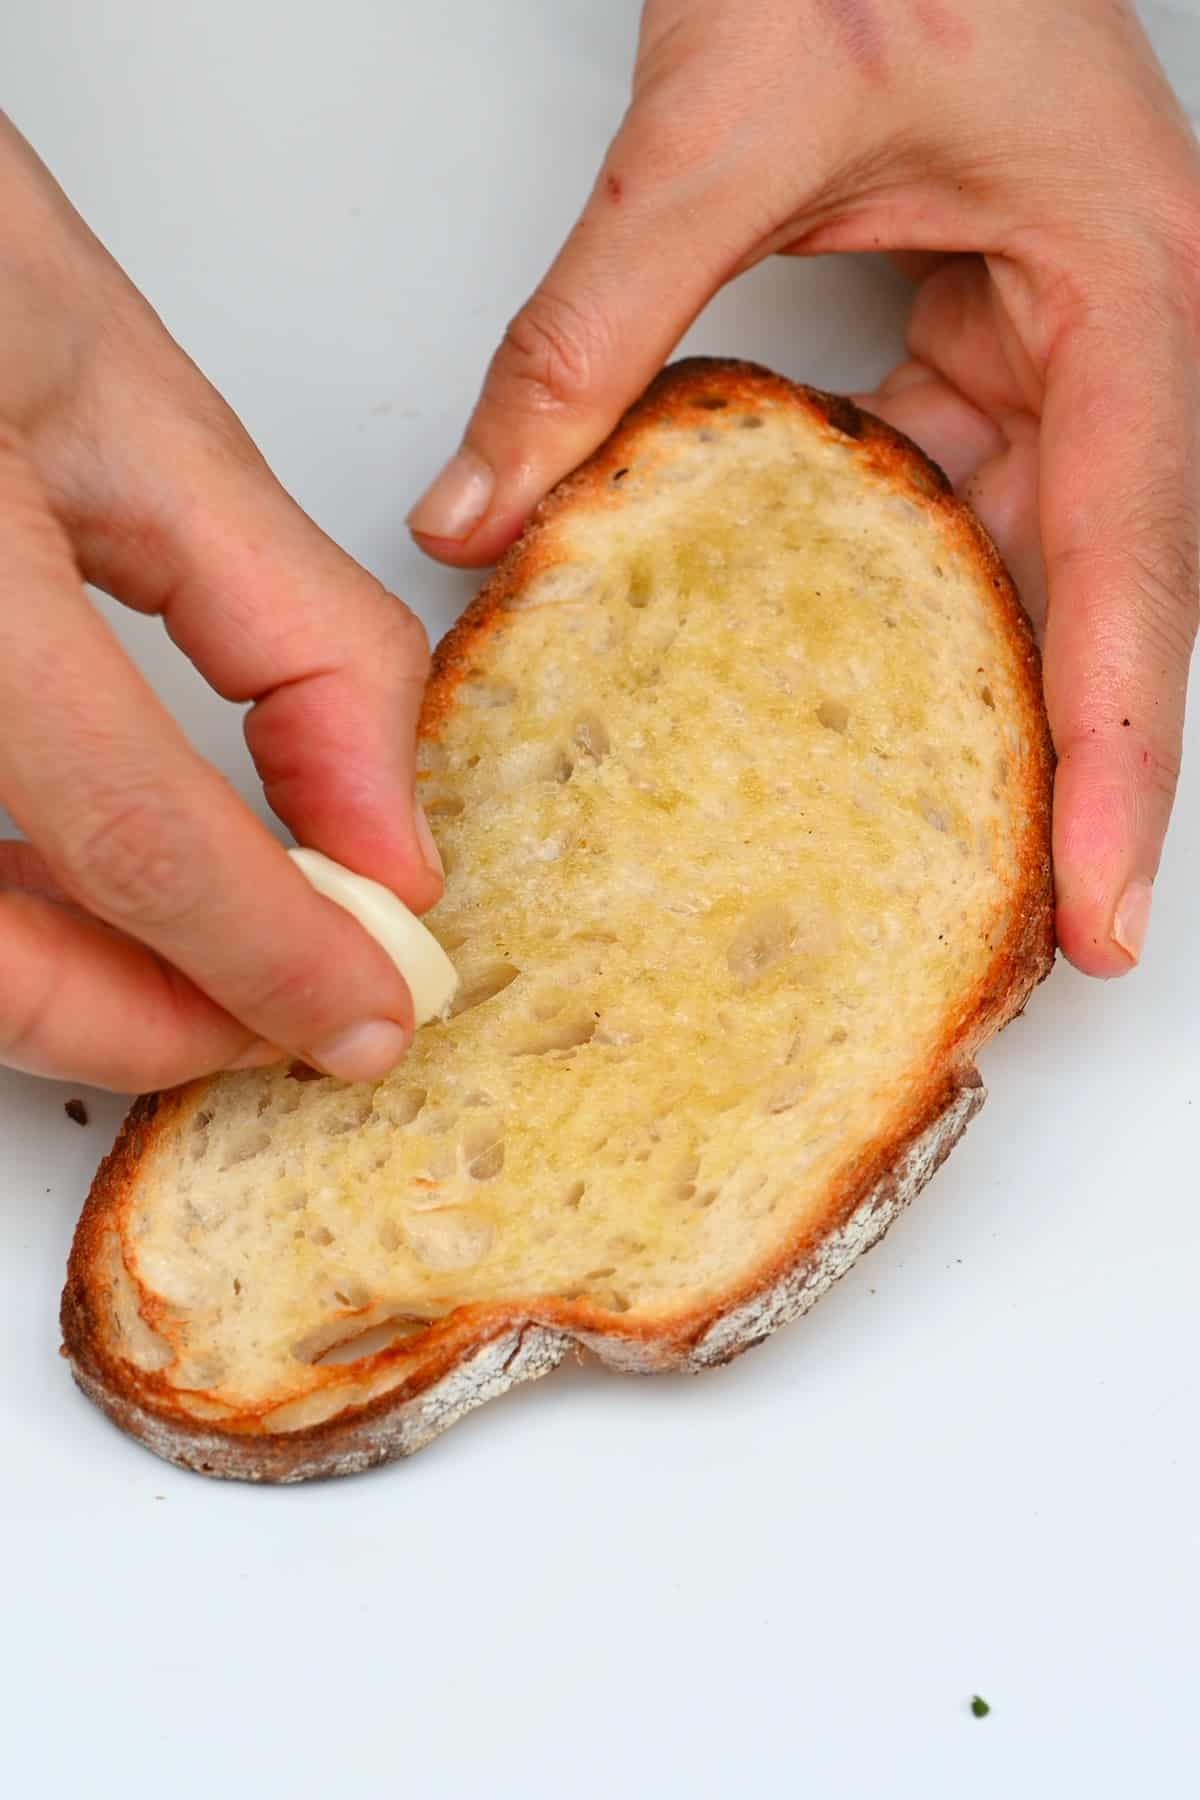 Rubbing garlic on toast